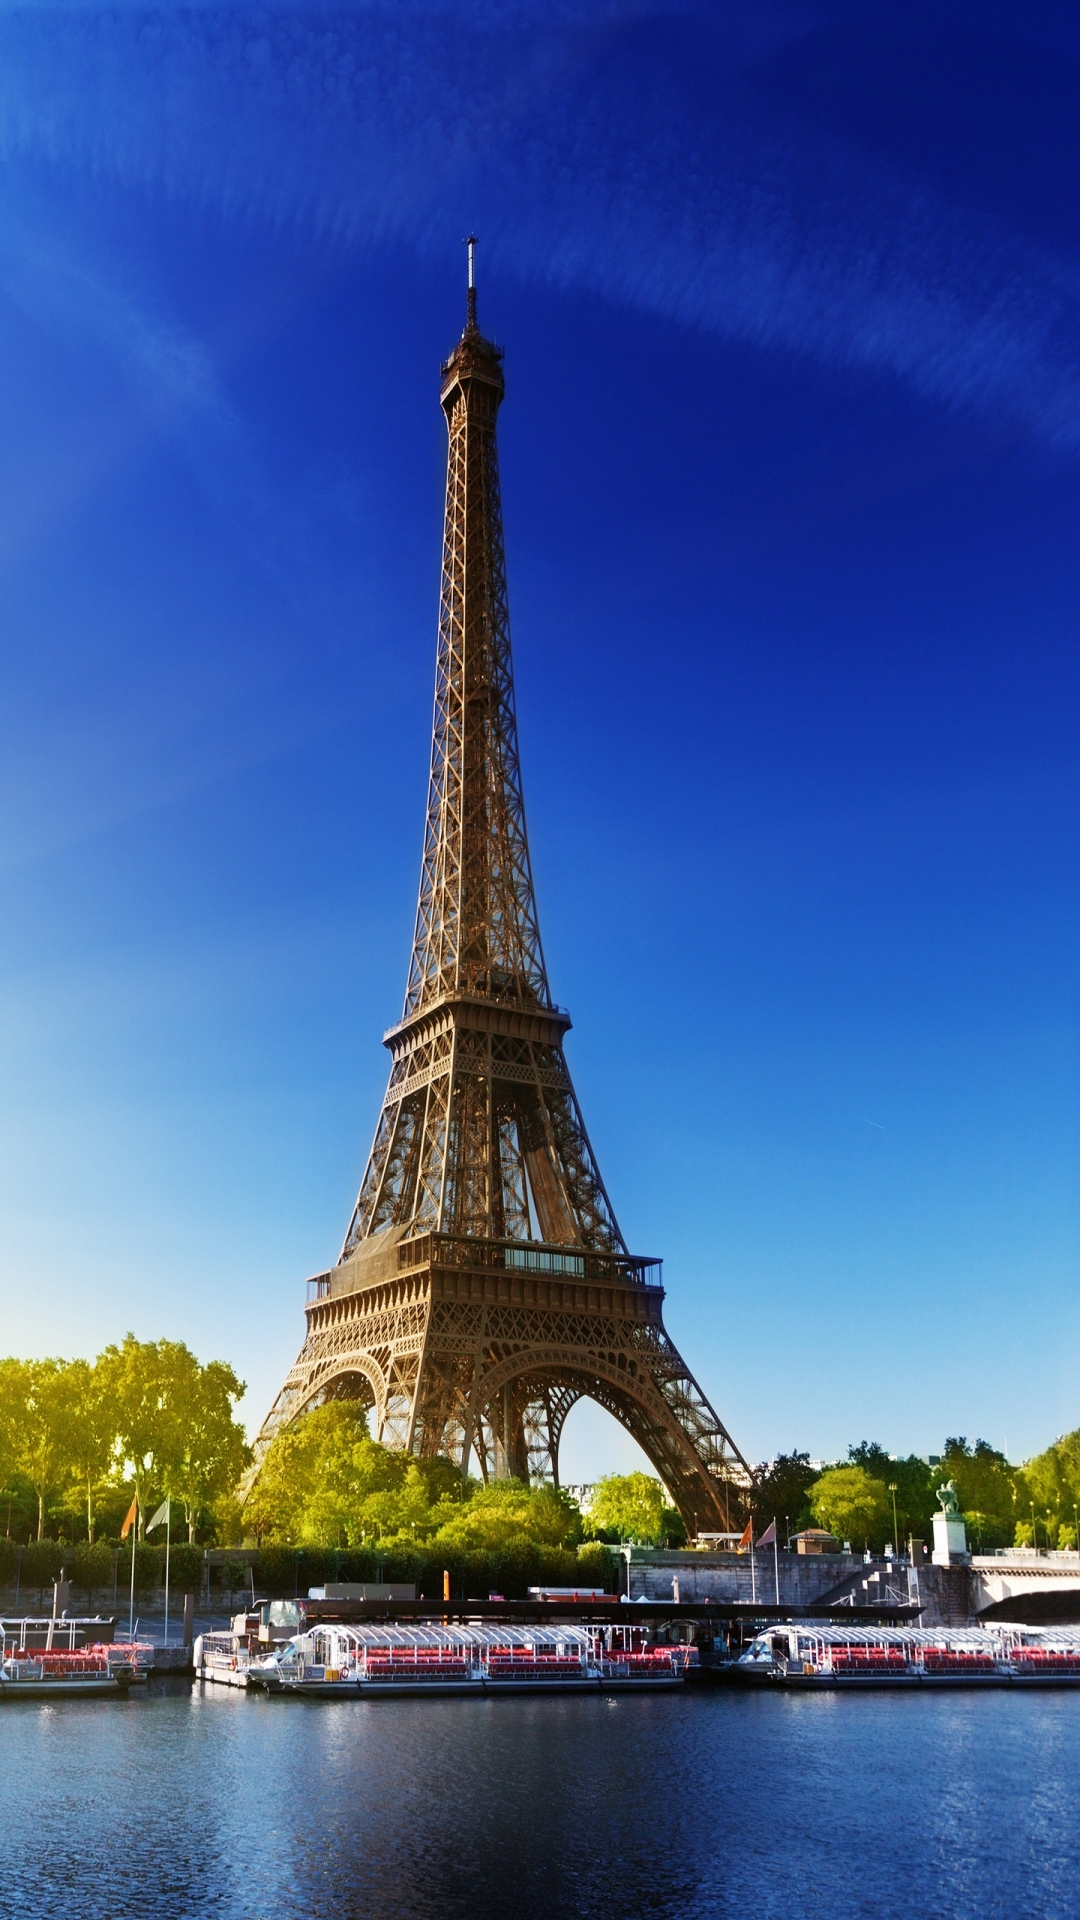 Eiffel Tower Paris for Samsung A9 Pro & A7 resolution